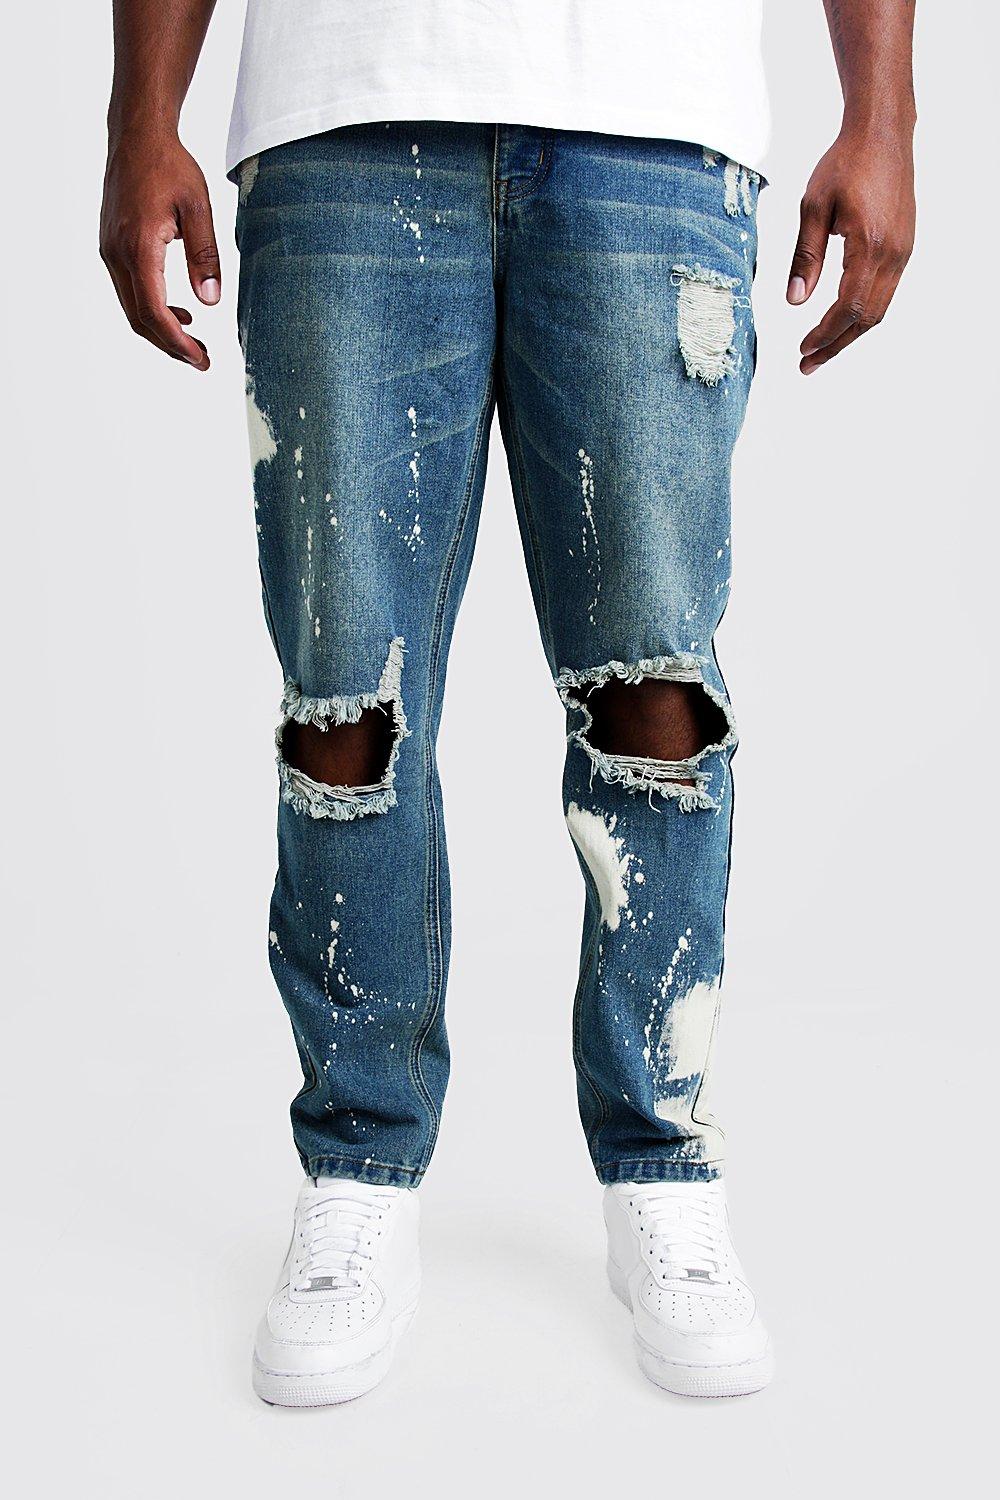 big holey jeans